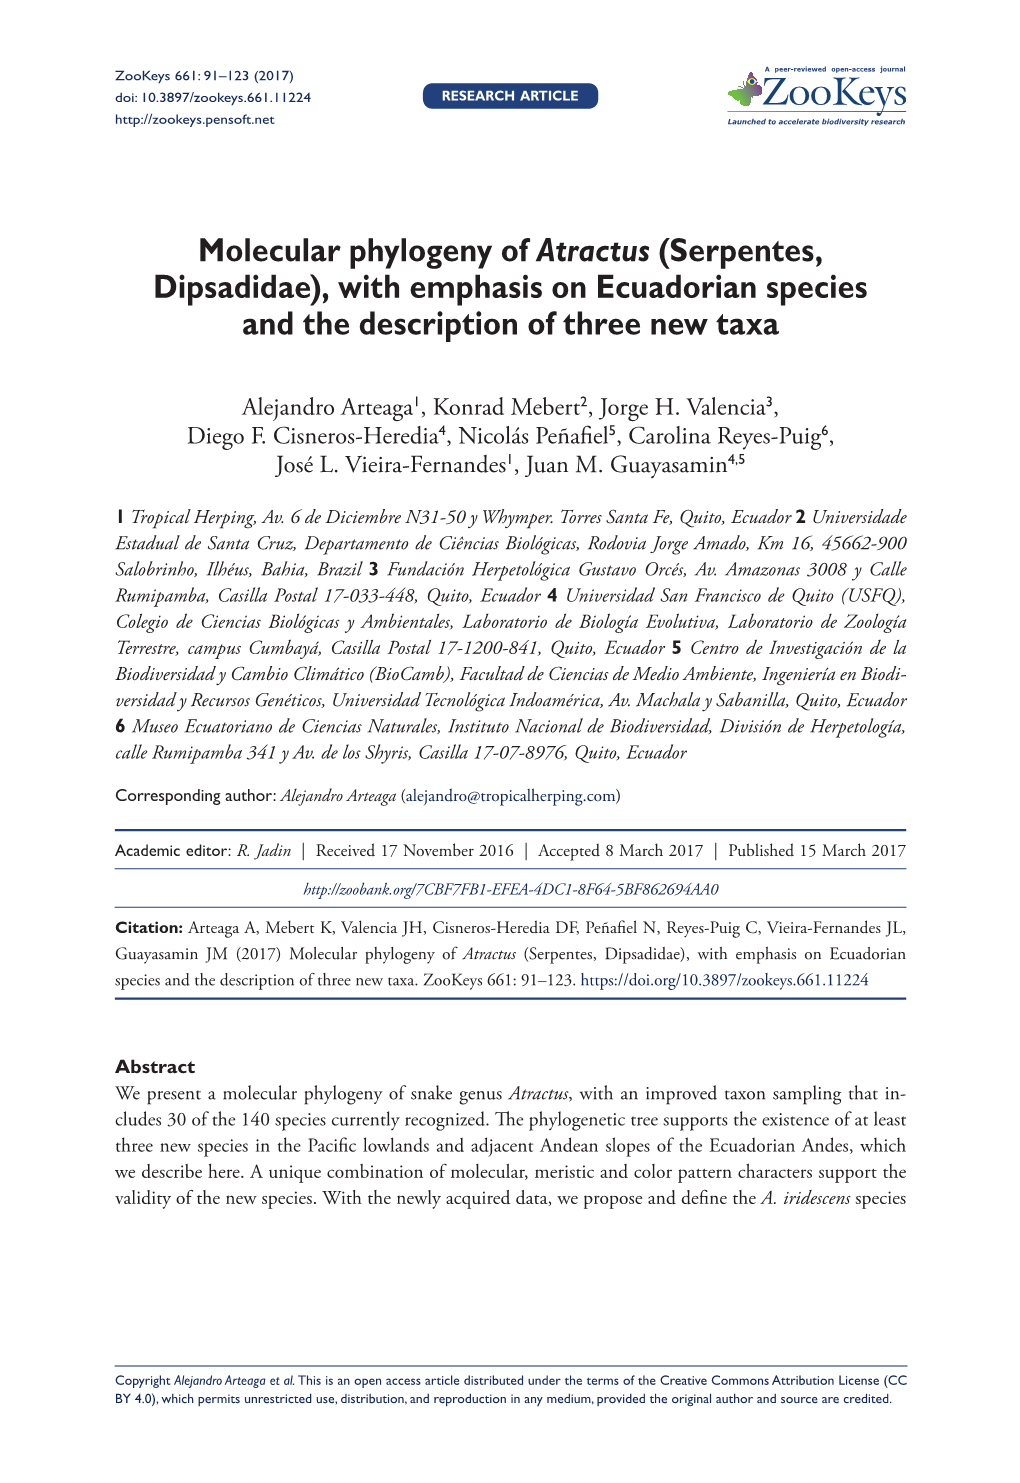 Molecular Phylogeny of Atractus (Serpentes, Dipsadidae)